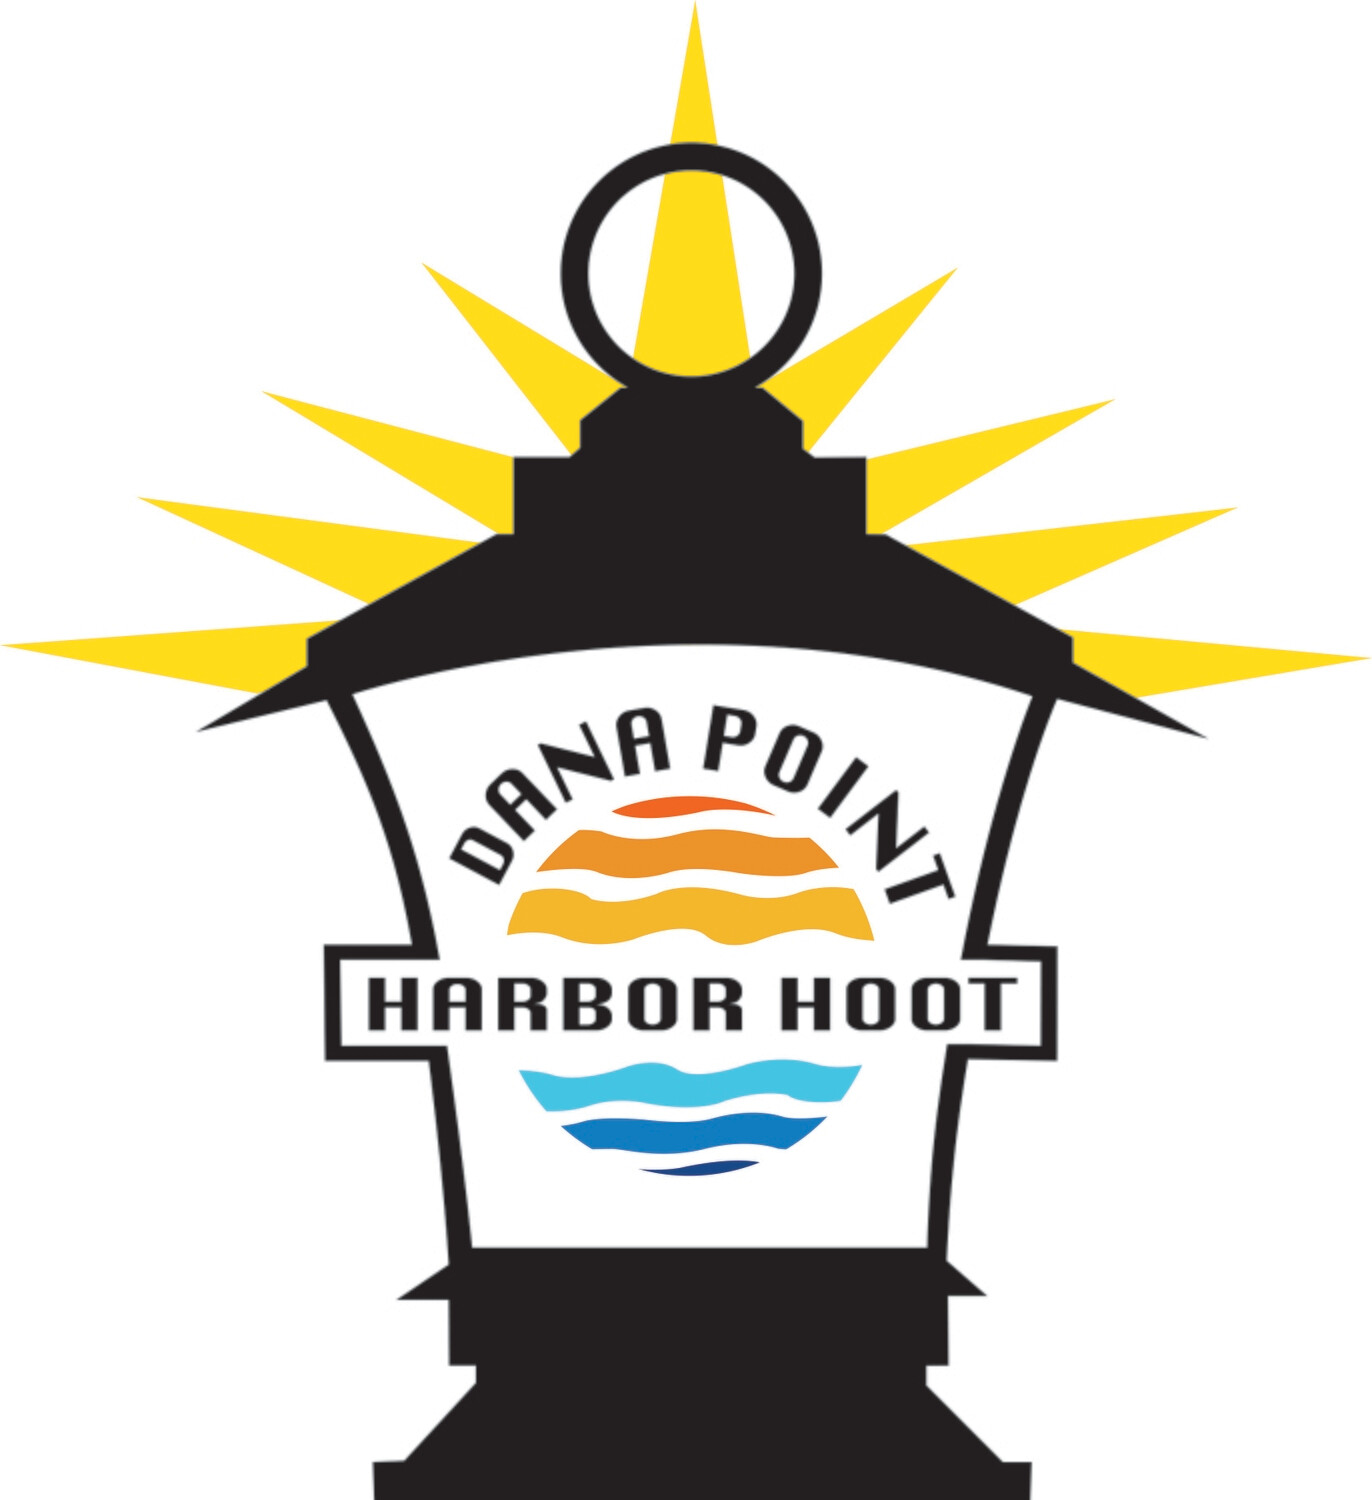 5th Annual Infinity SUP Dana Point Harbor Hoot